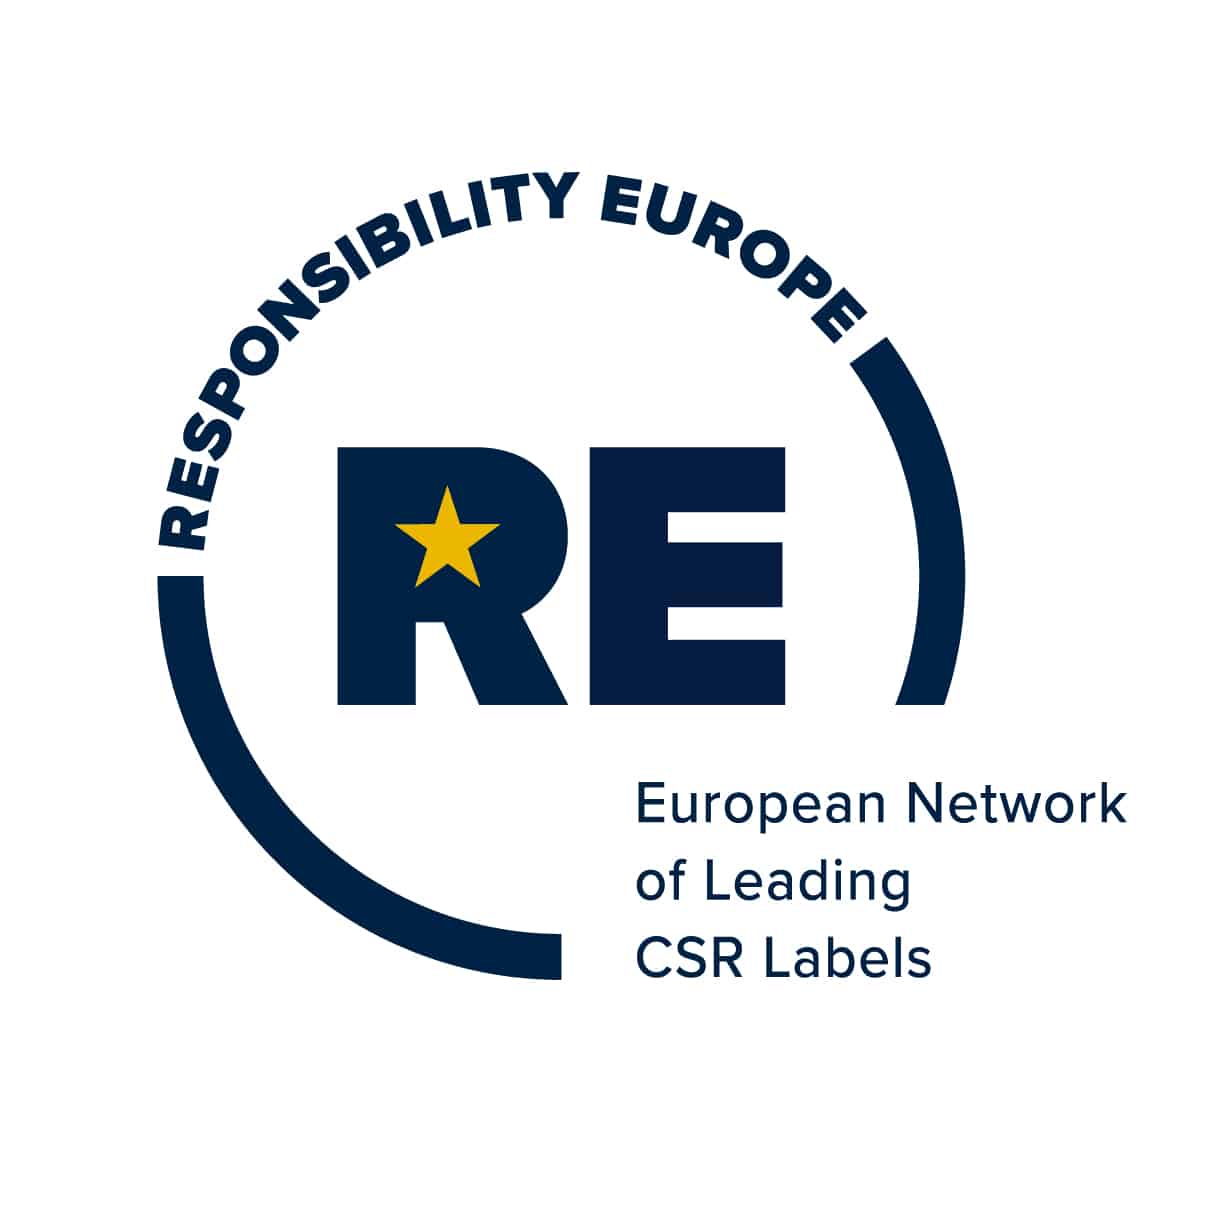 Label Responsibility Europe